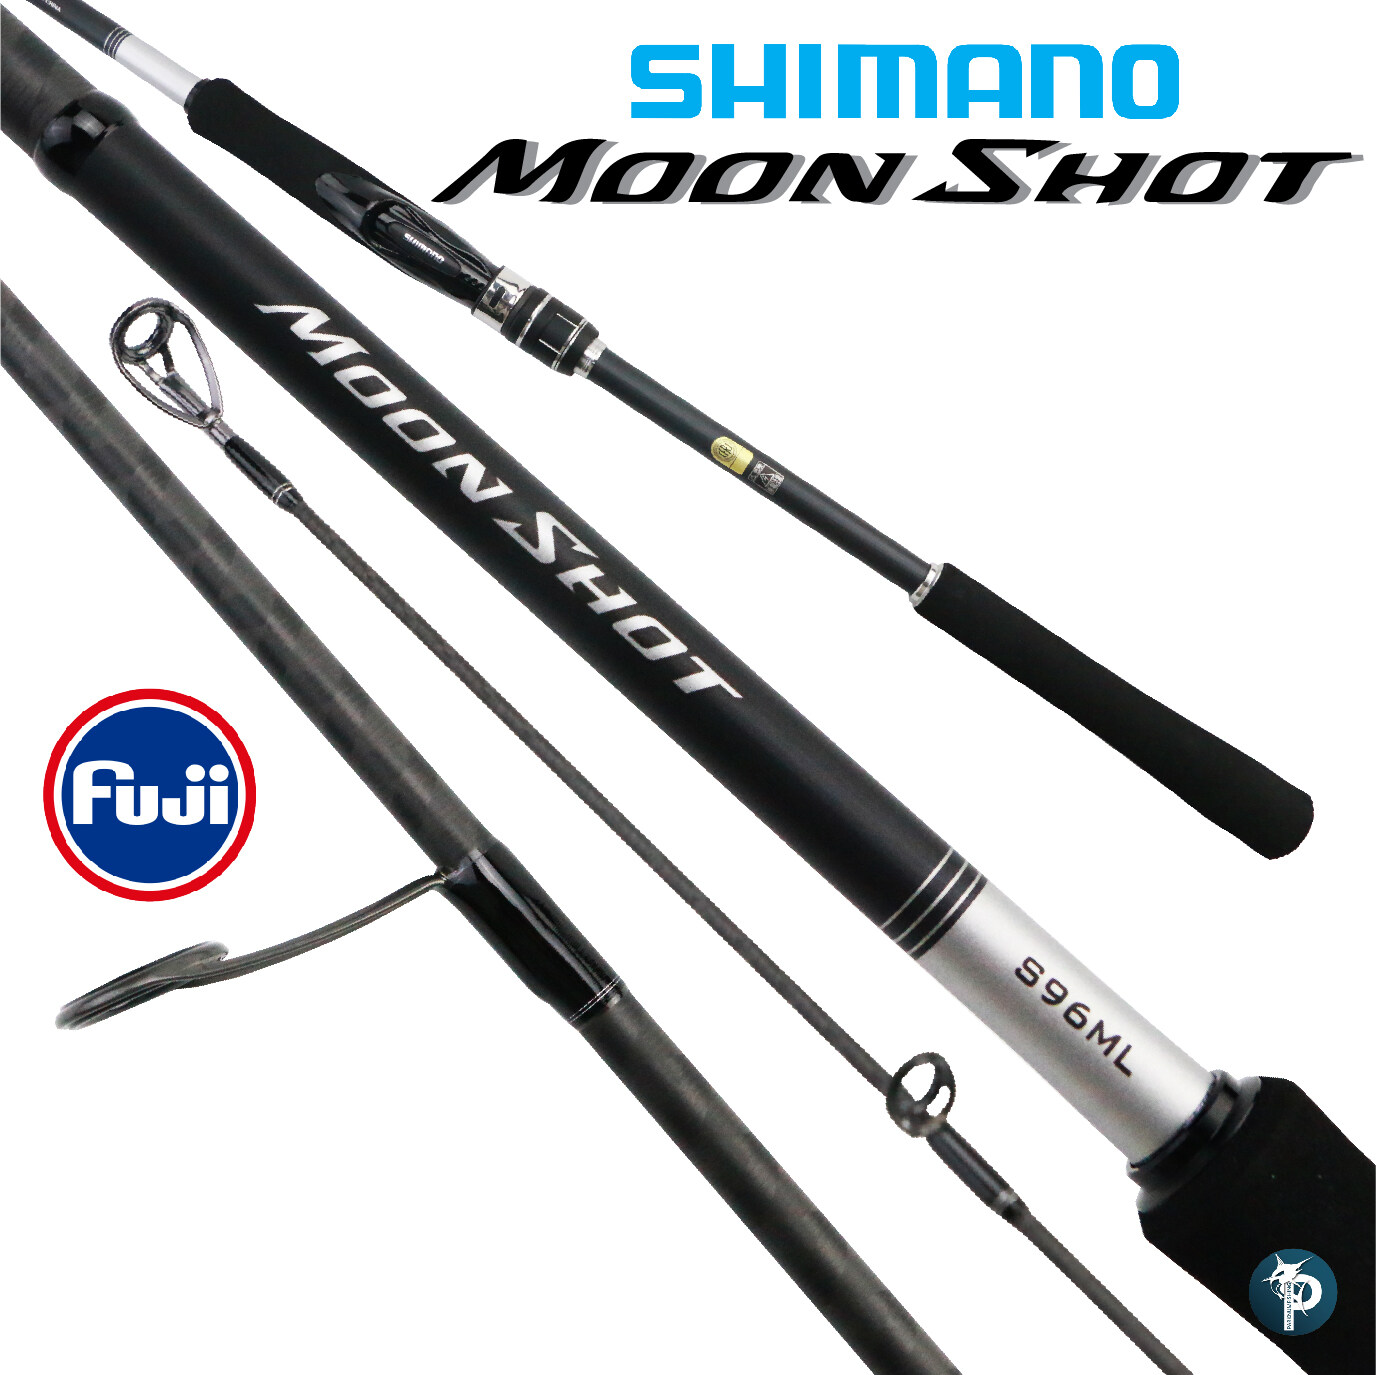 Shimano 21 MOON SHOT S100 MH 10ft Spinning Rod Seabass Rockfish Flatfish